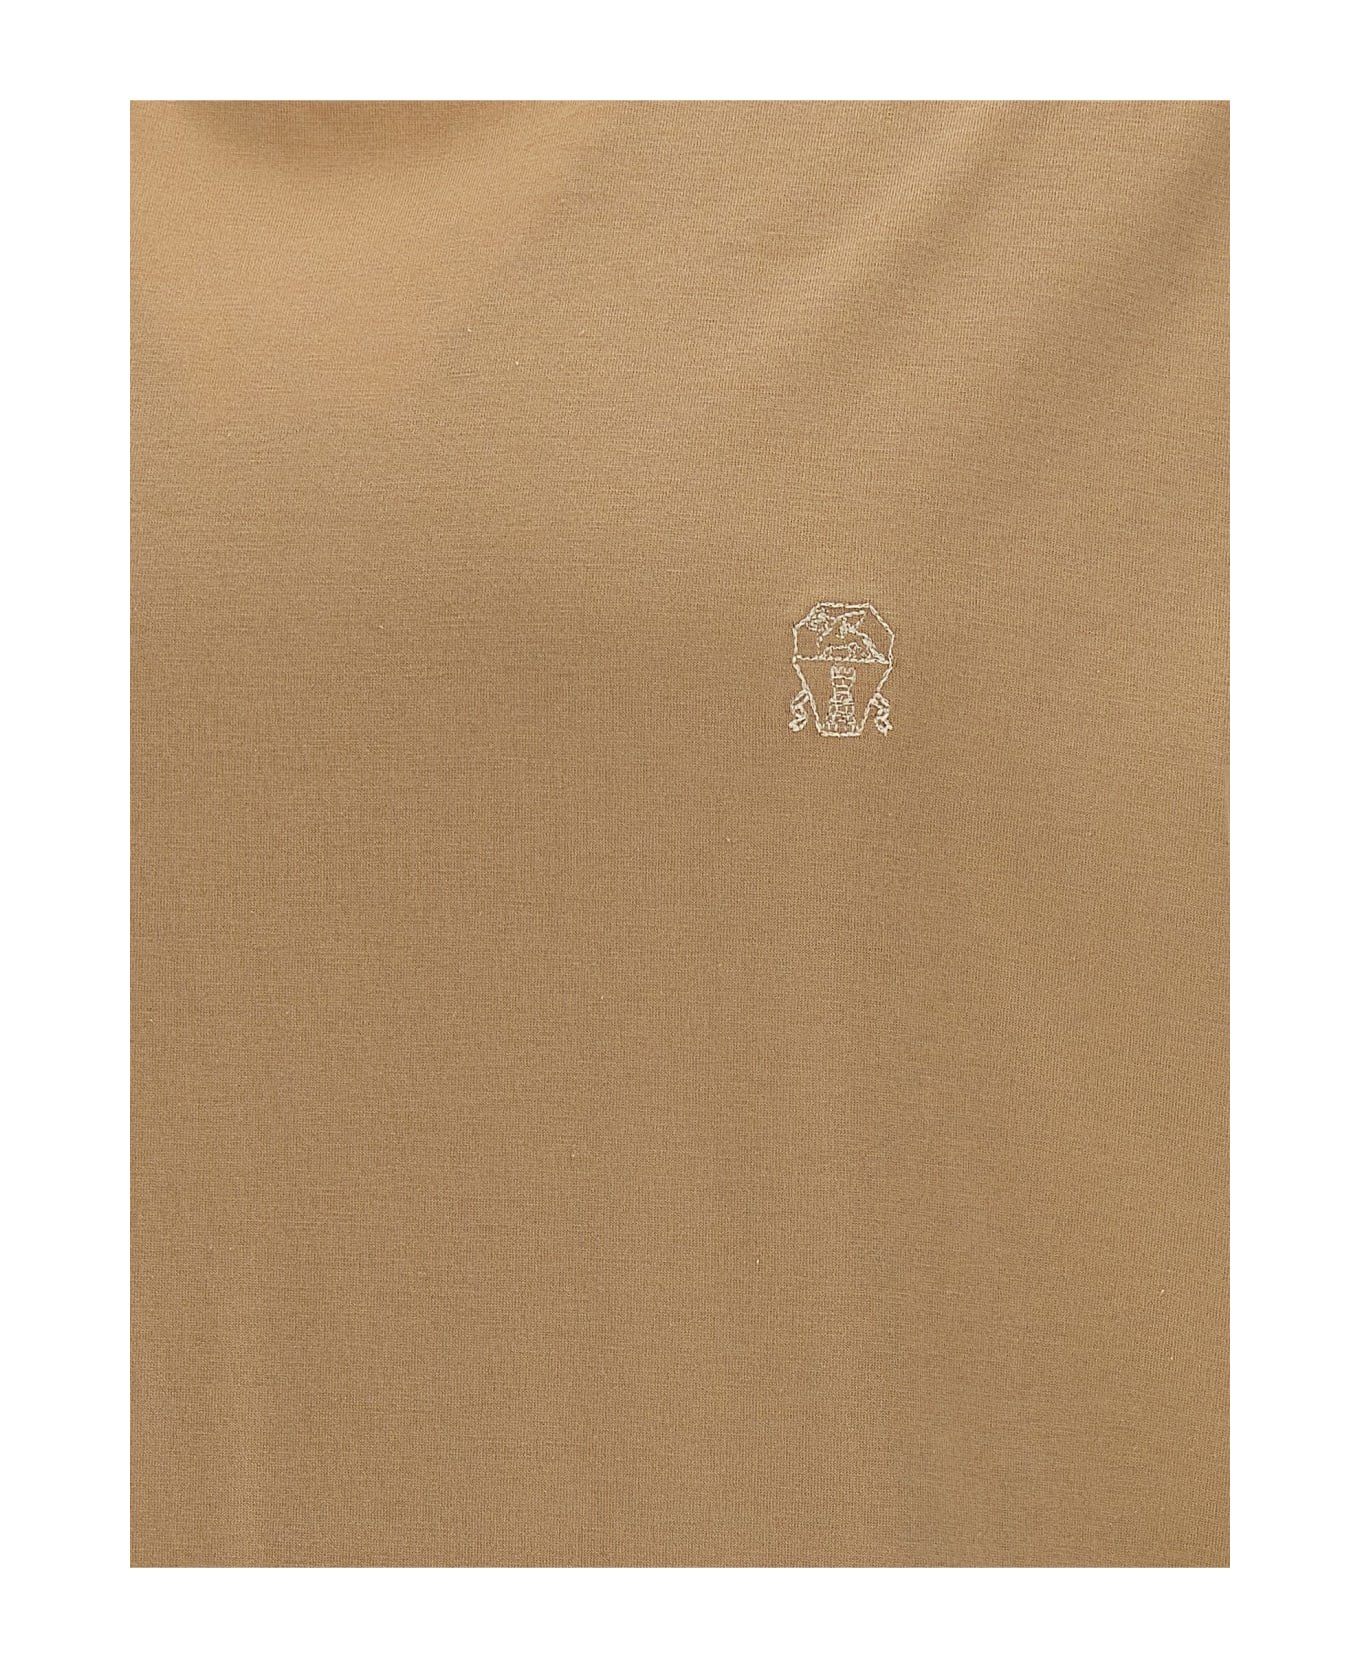 Brunello Cucinelli Double Layer T-shirt - Beige